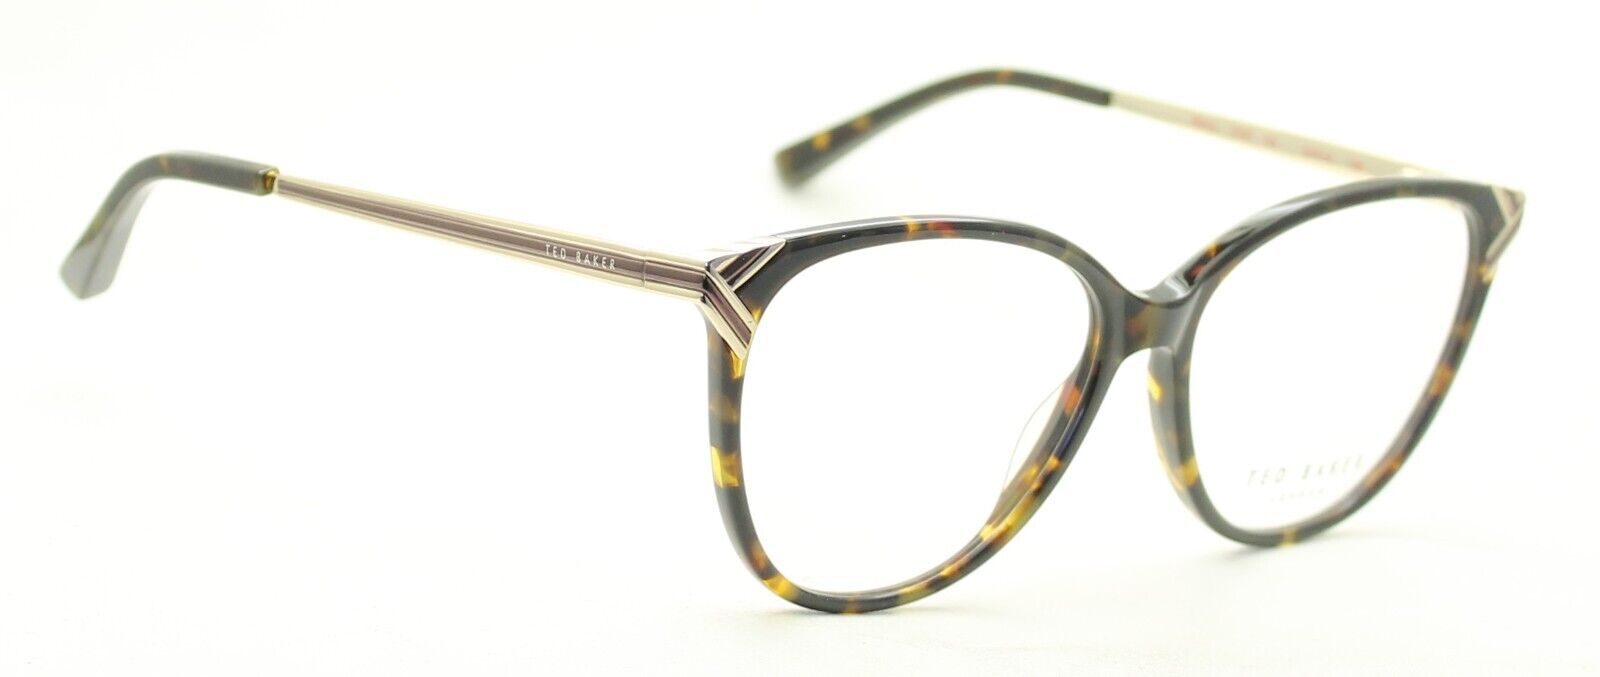 LOUIS MARCEL LMC139 C1 51mm Eyewear FRAMES RX Optical Eyeglasses Glasses -  New - GGV Eyewear